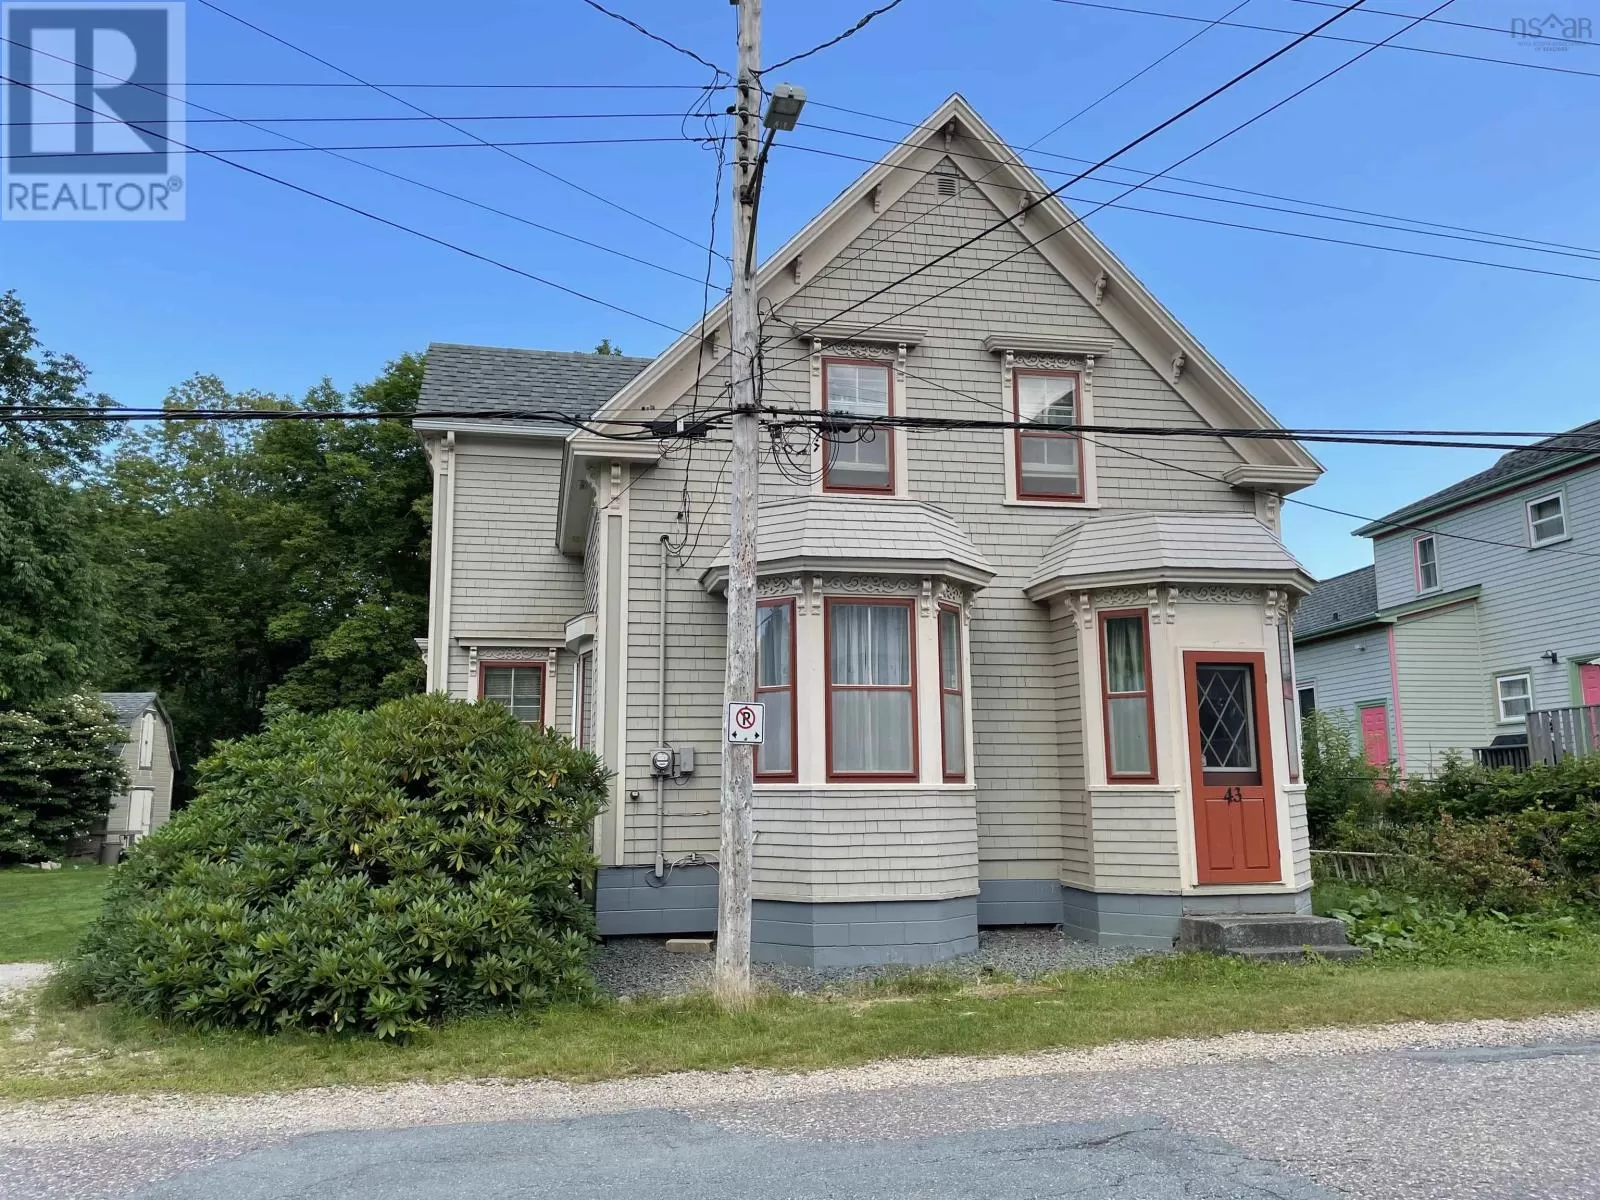 House for rent: 43 Fairmont Street, Mahone Bay, Nova Scotia B0J 2E0